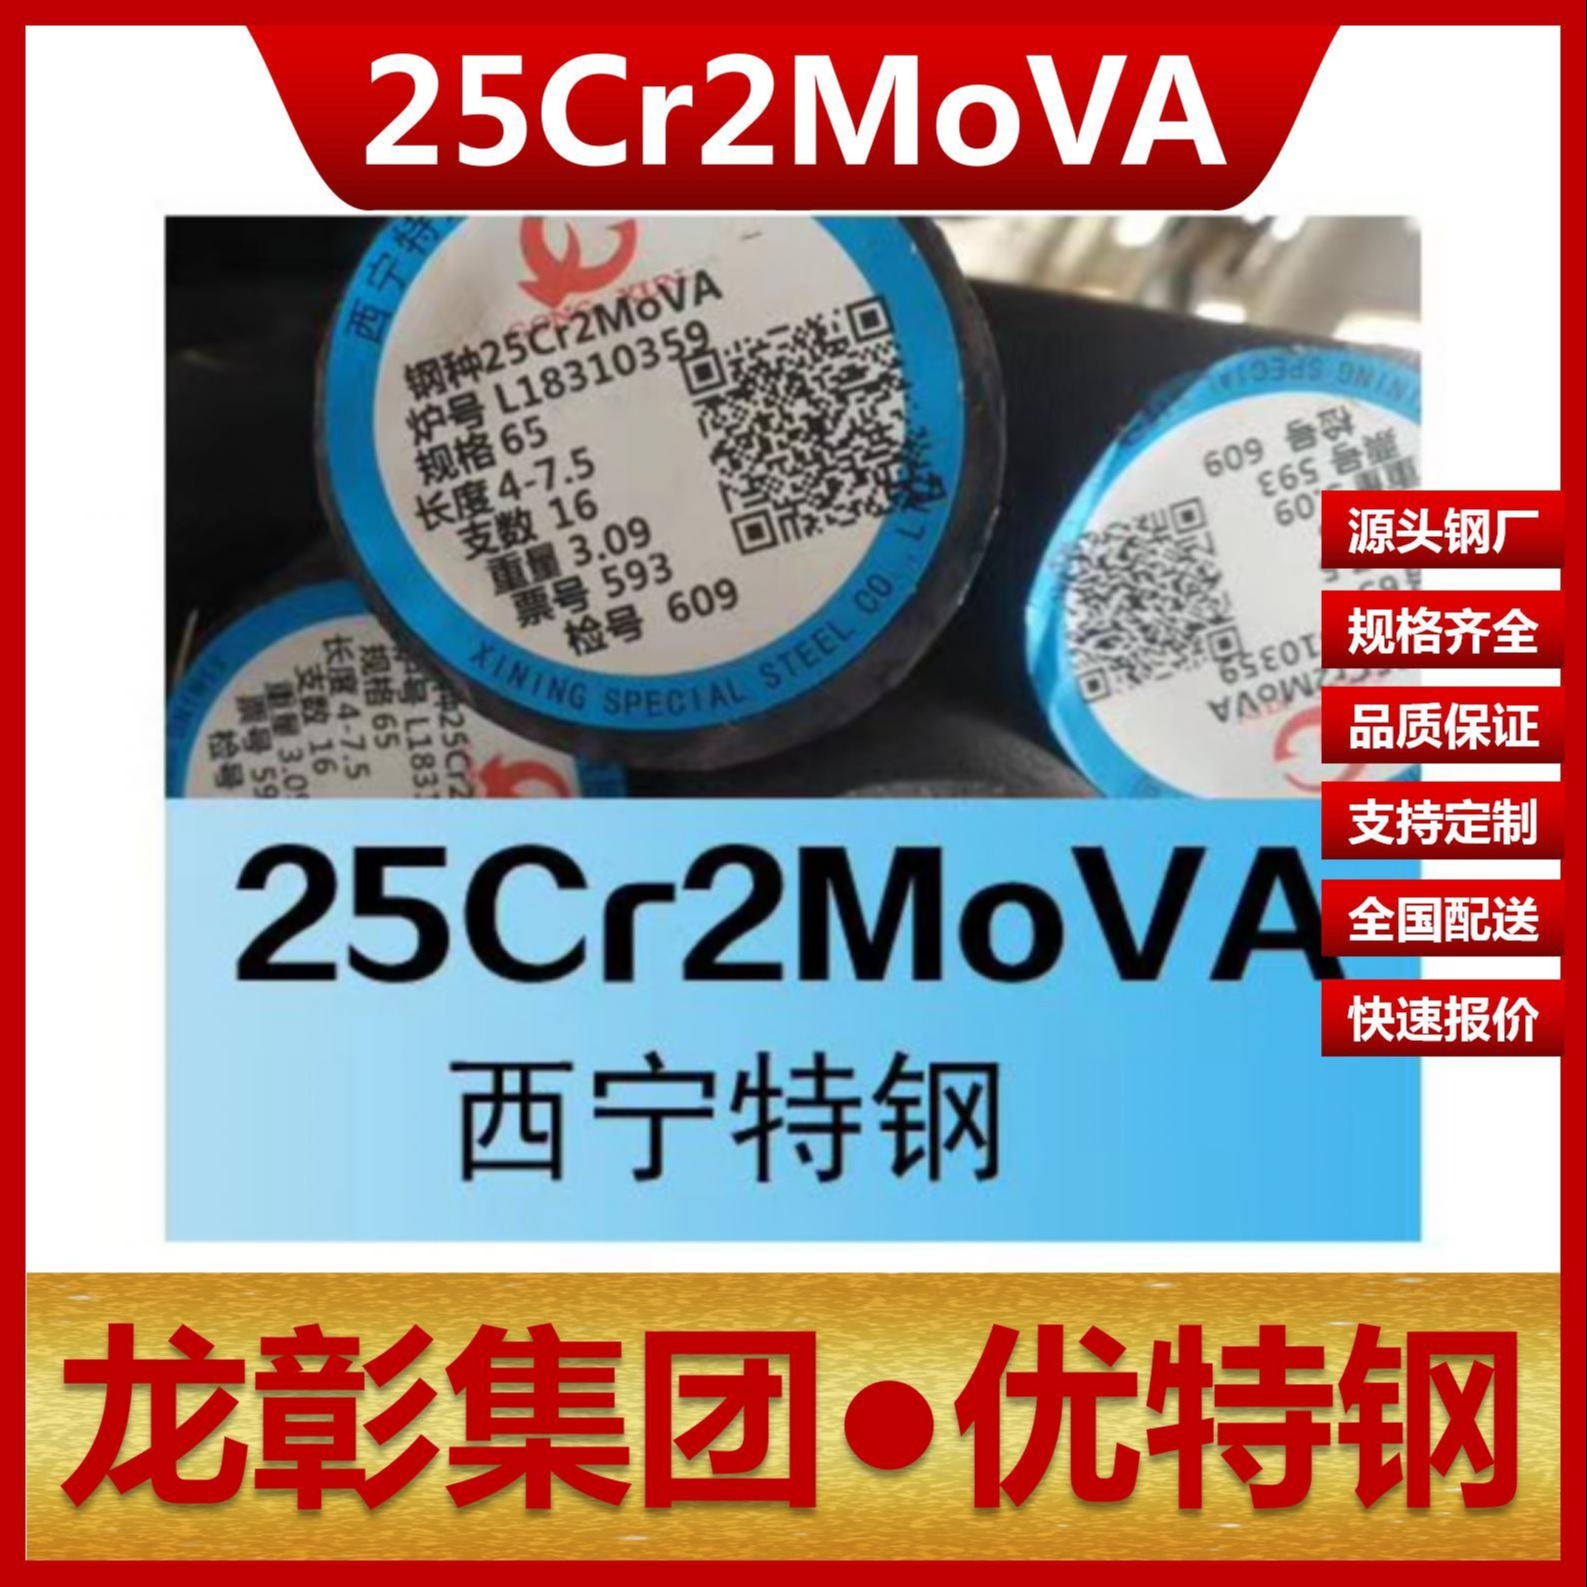 25Cr2MoVA圆钢现货批零 龙彰集团主营25Cr2MoVA圆钢棒支持定制锻件